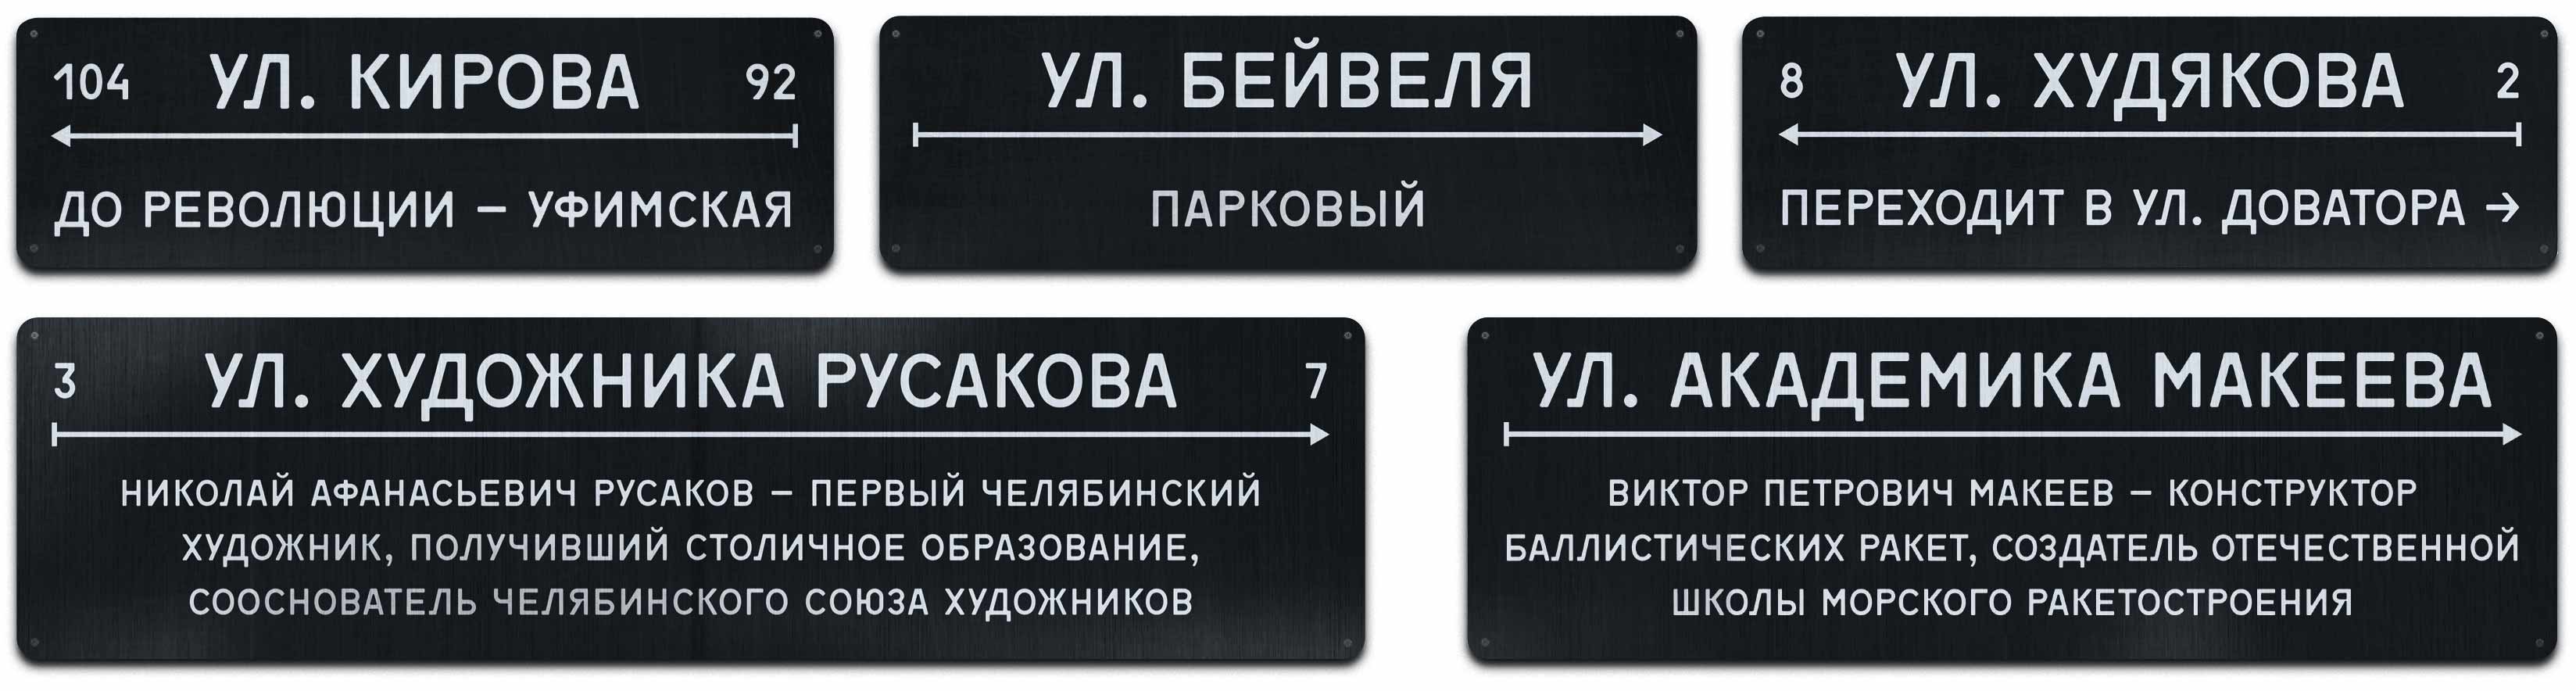 Chelyabinsk address plates